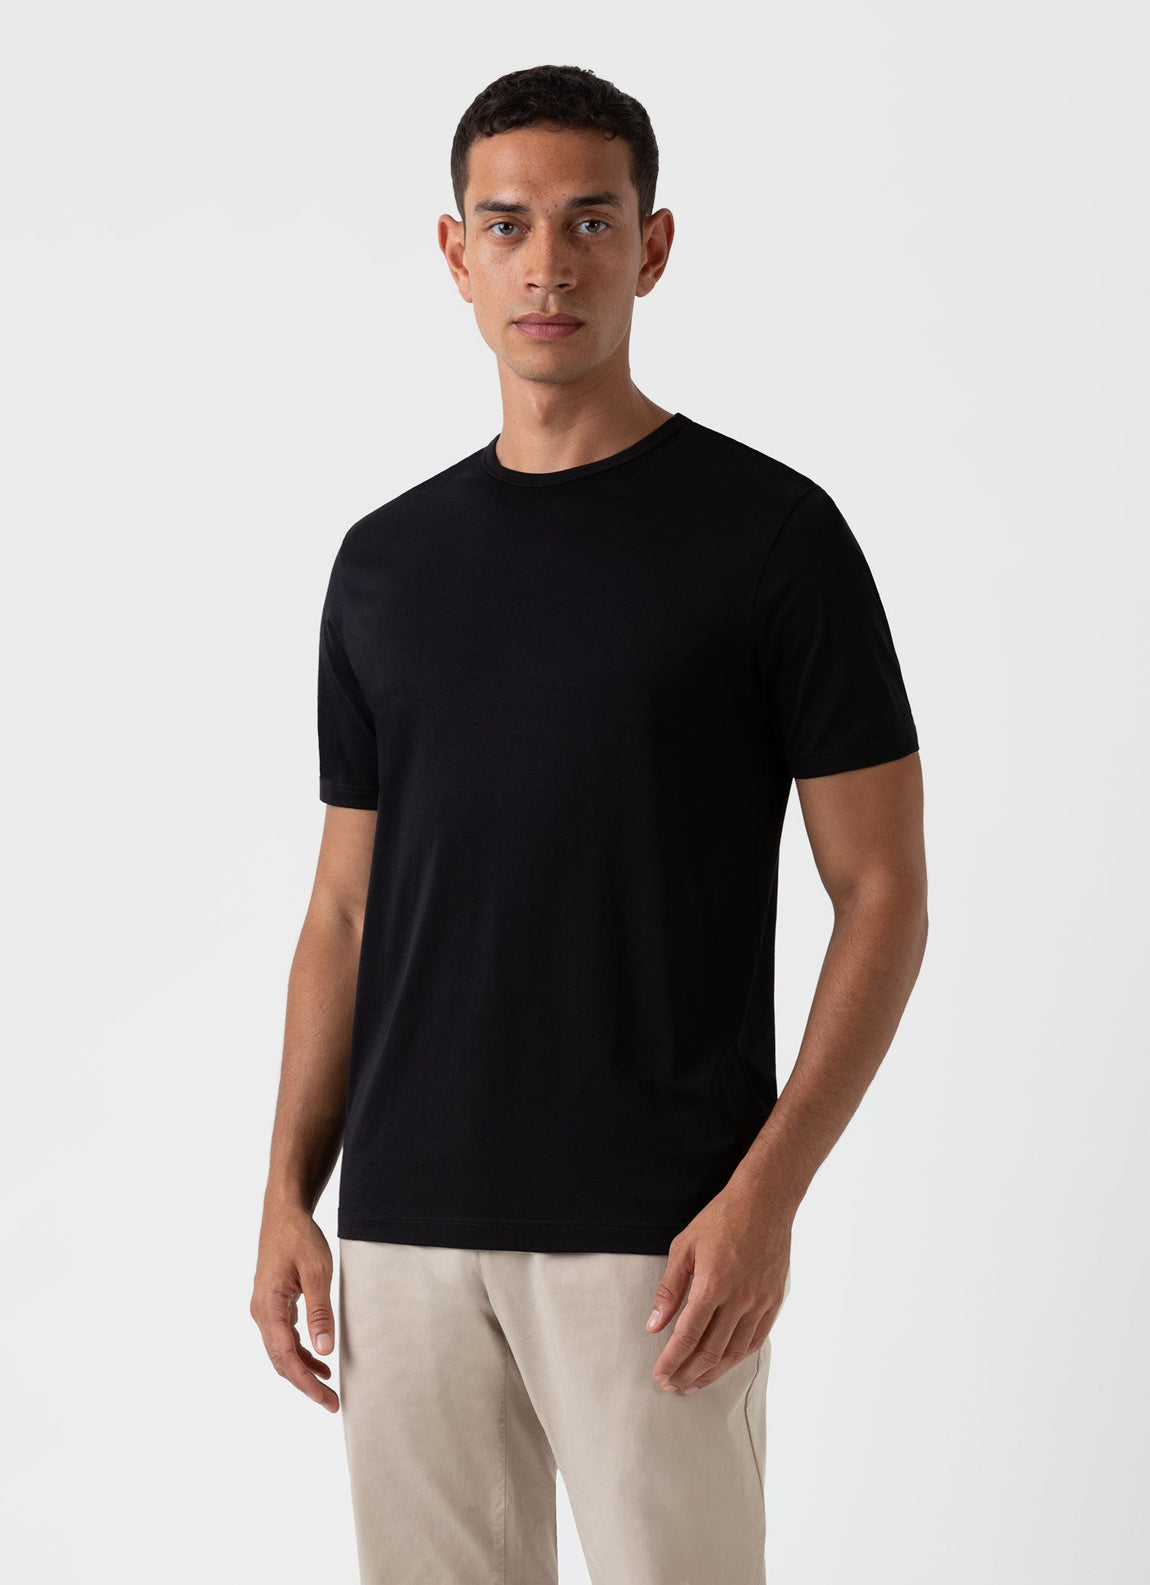 Men's Black Shirts